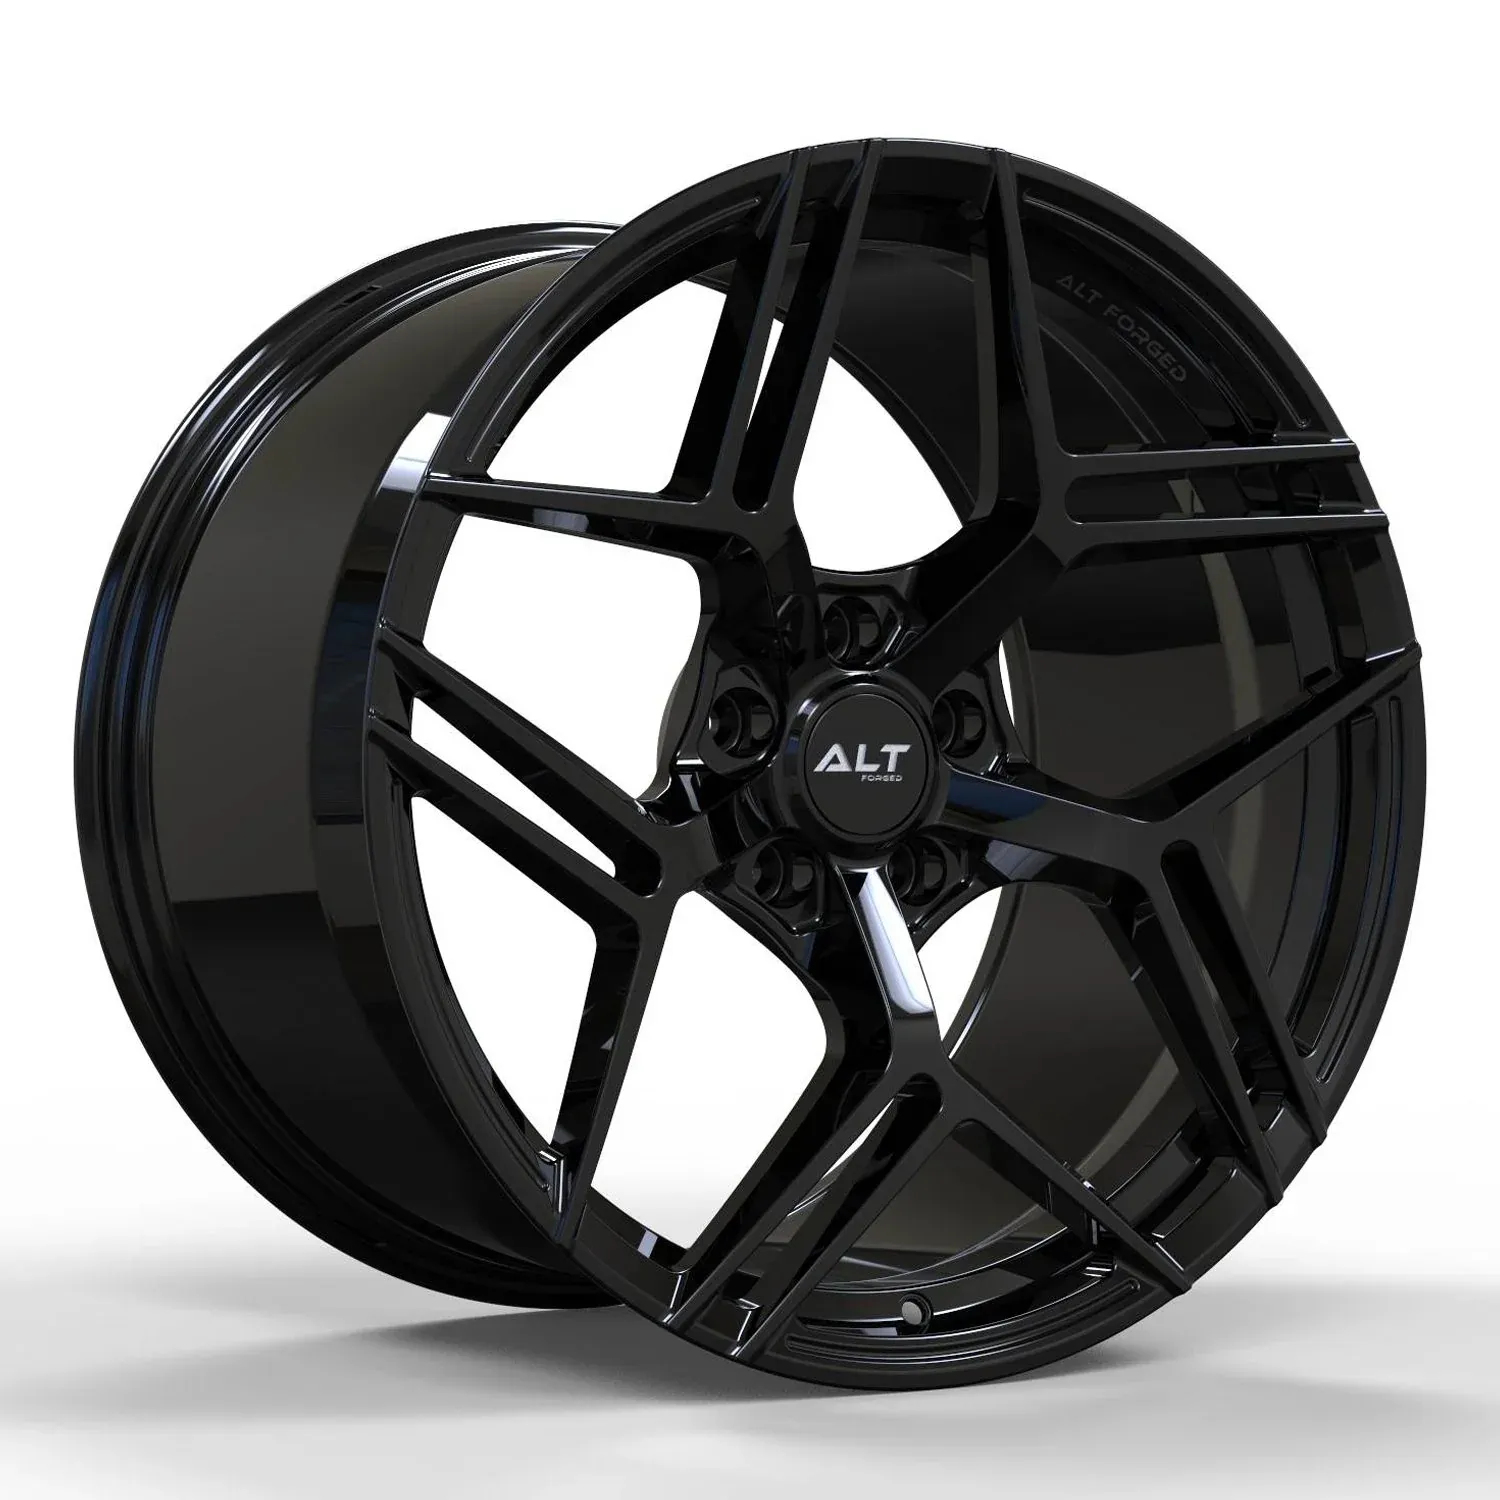 ALT12R Forged Carbon Flash wheels for C8 Corvette Z06 / E-Ray